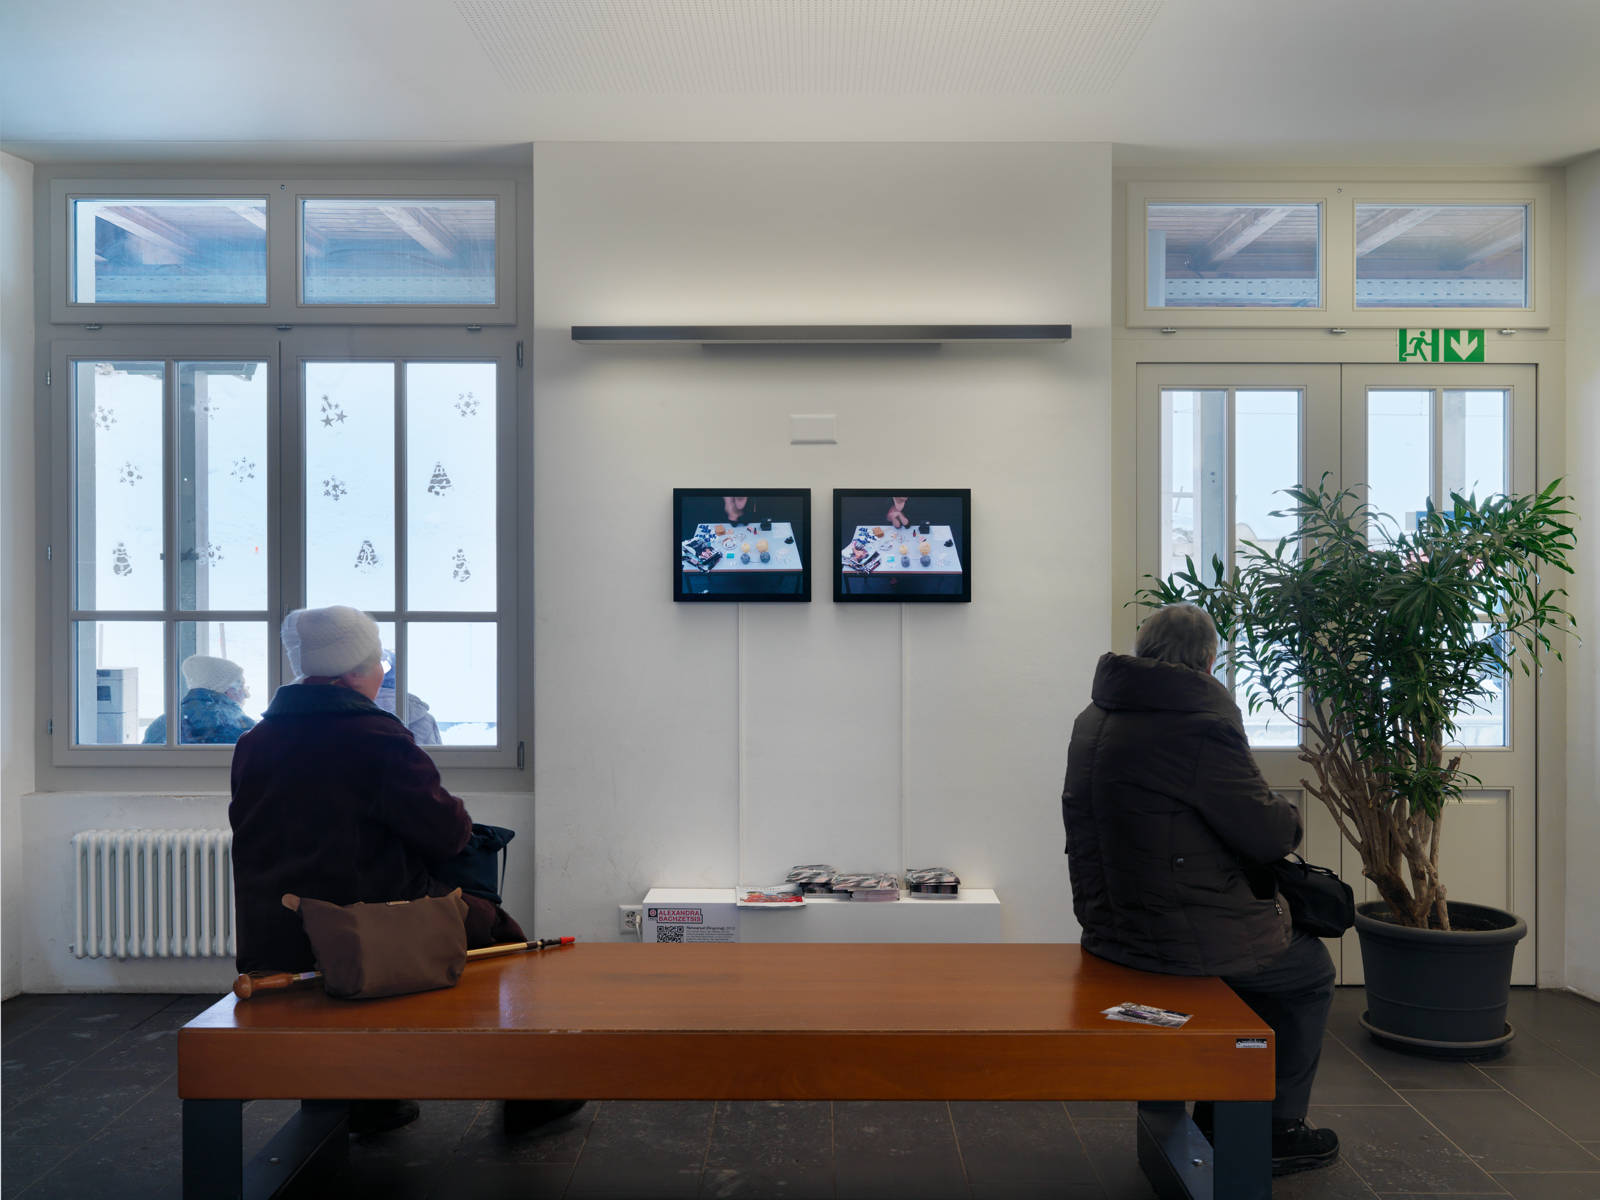 Alexandra Bachzetsis / "Elevation1049", exhibition view, Gstaad / 2014